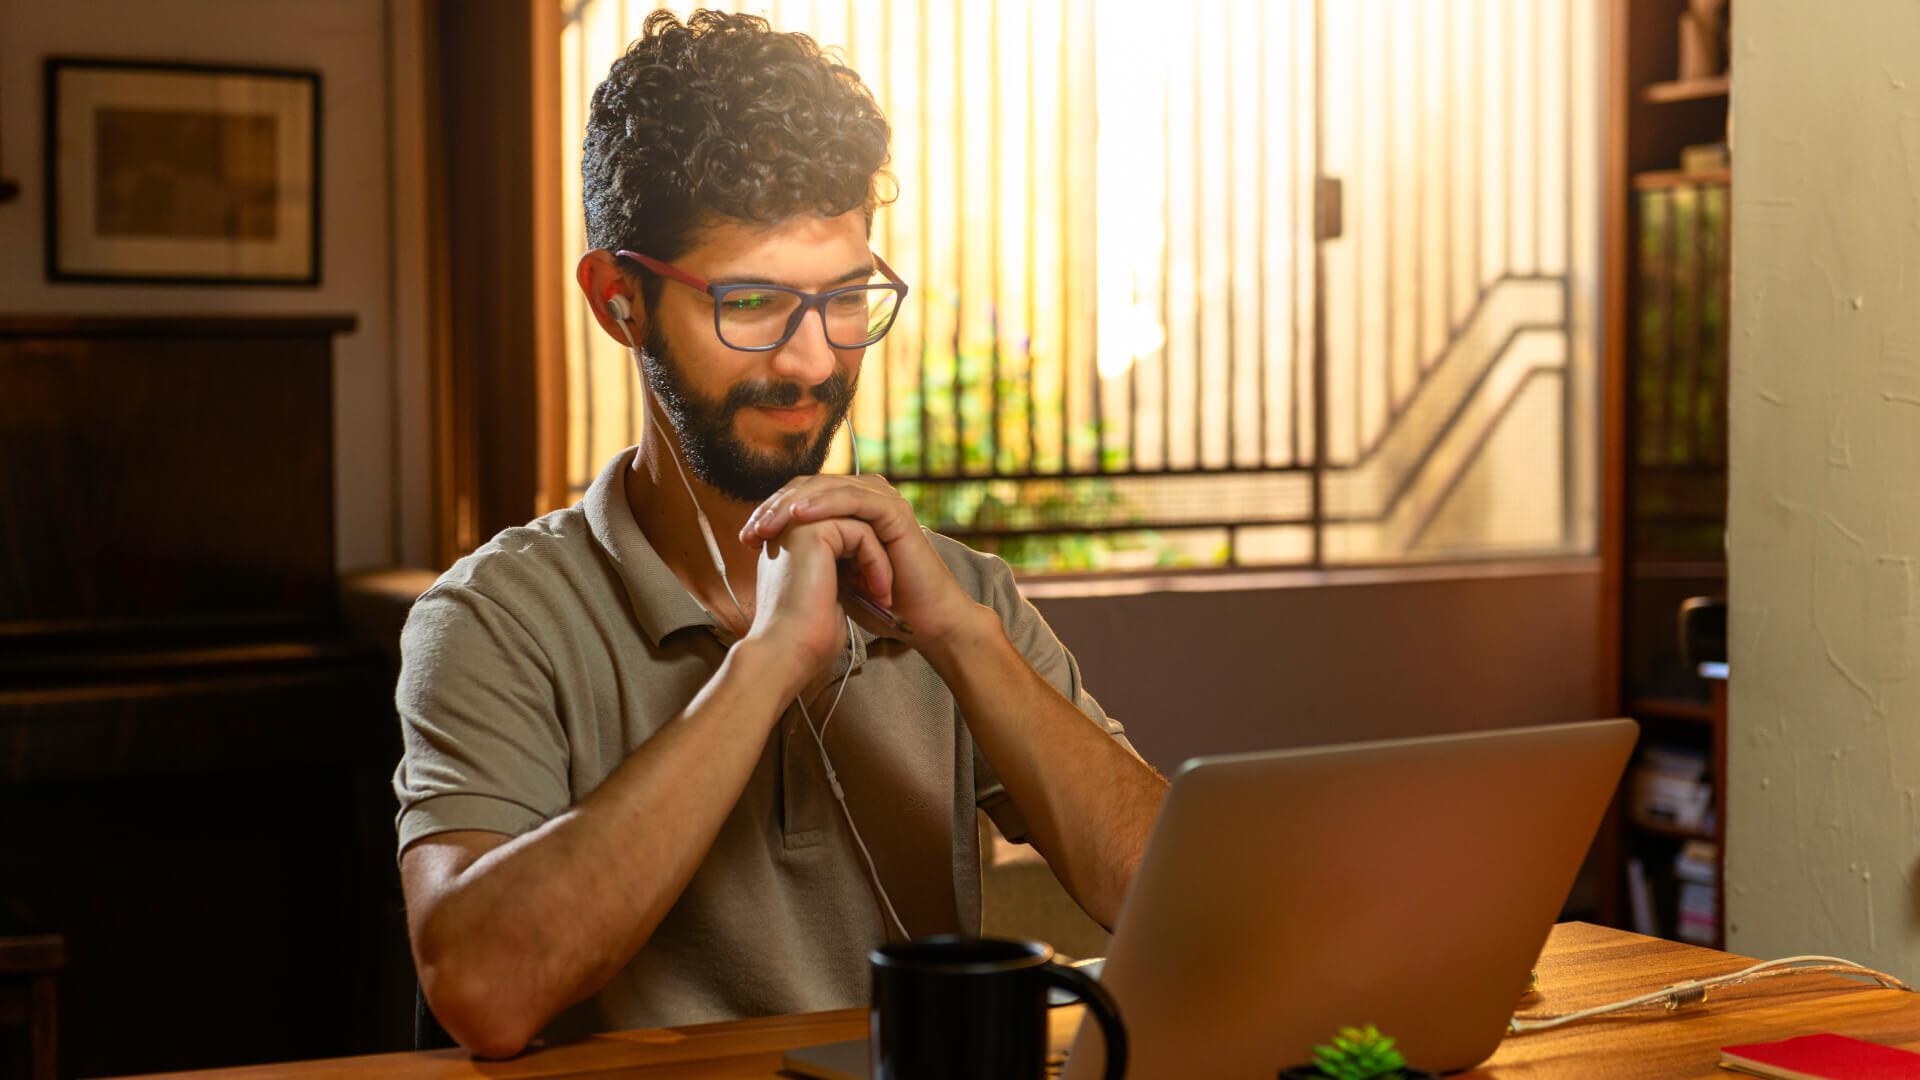 man wearing headphones smiling at computer screen